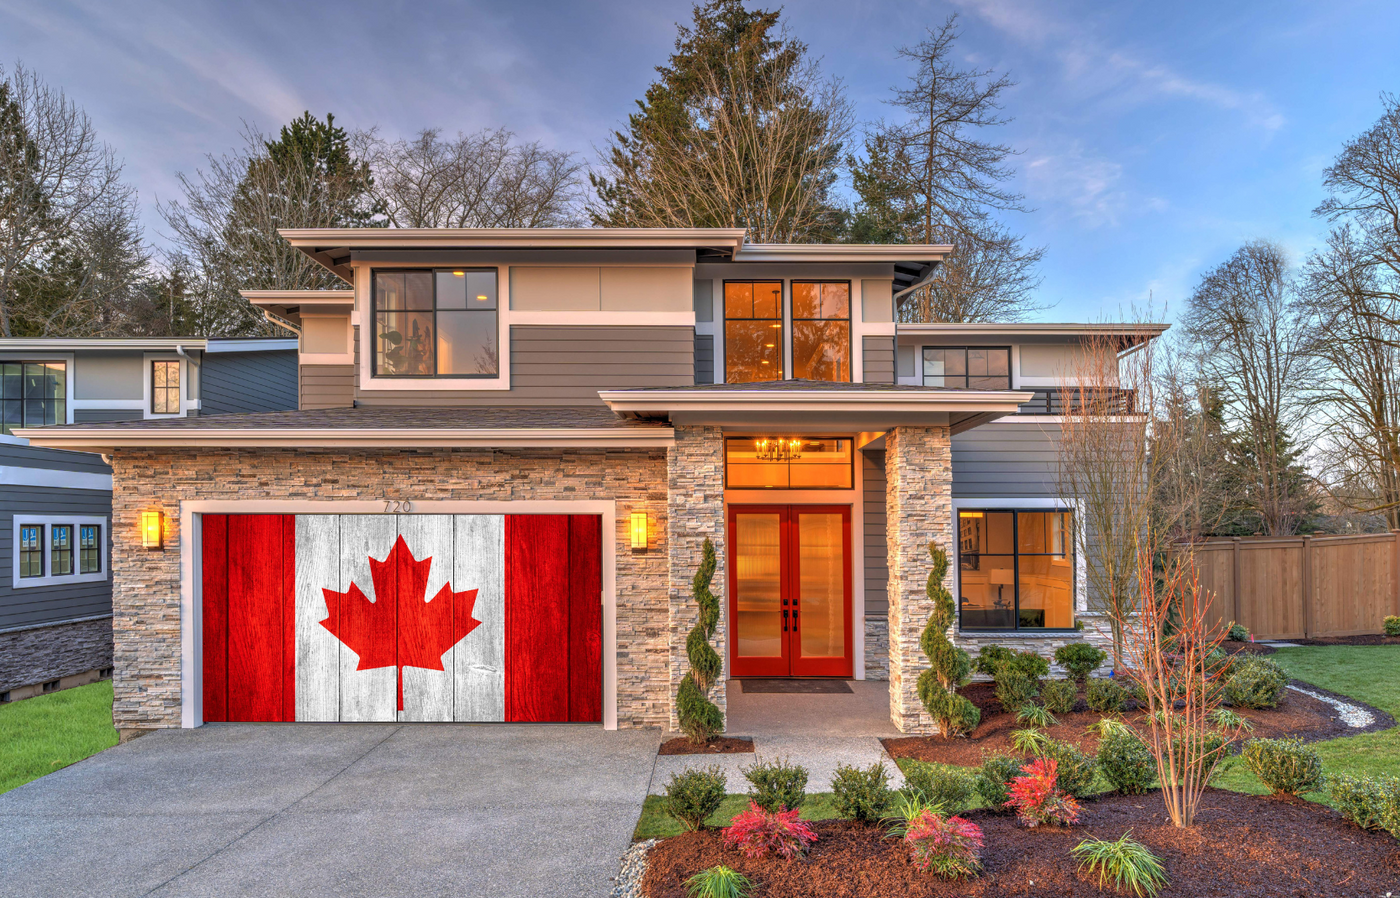 Canada Flag On Wooden Background Garage Door Wrap Cover Decoration Banner Backdrop